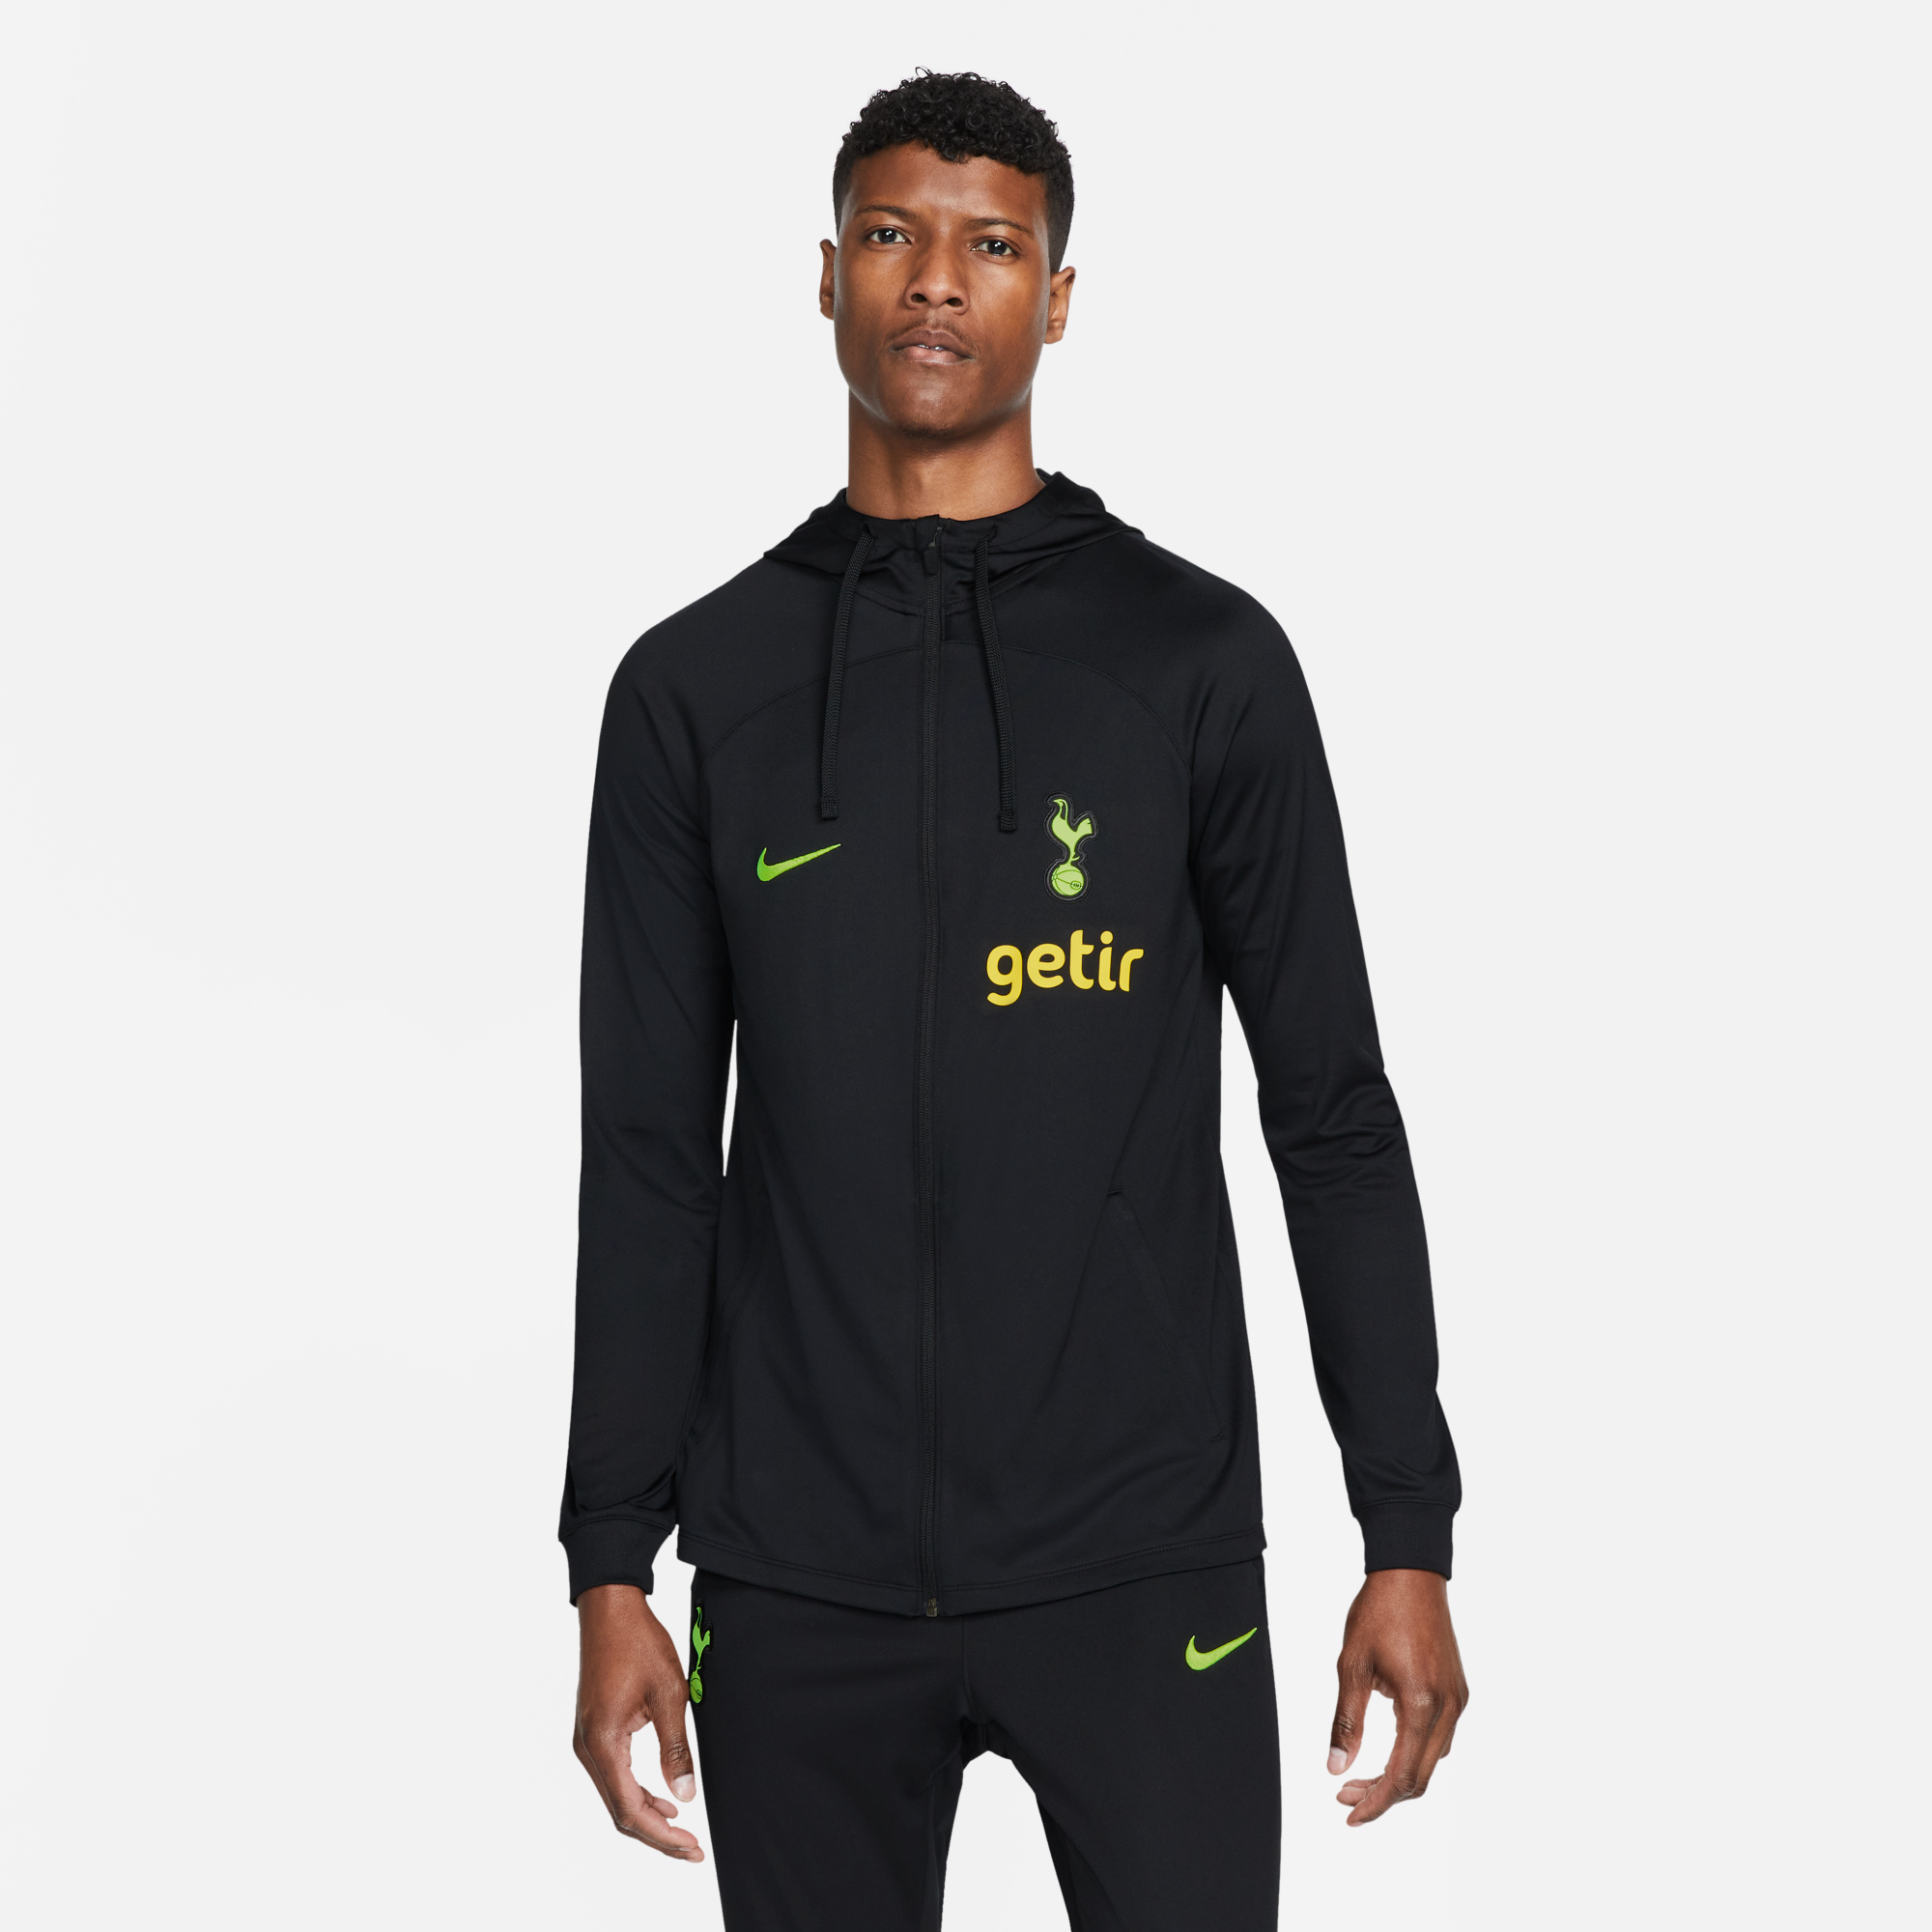 Men's Nike Navy Tottenham Hotspur Half-Zip Track Jacket